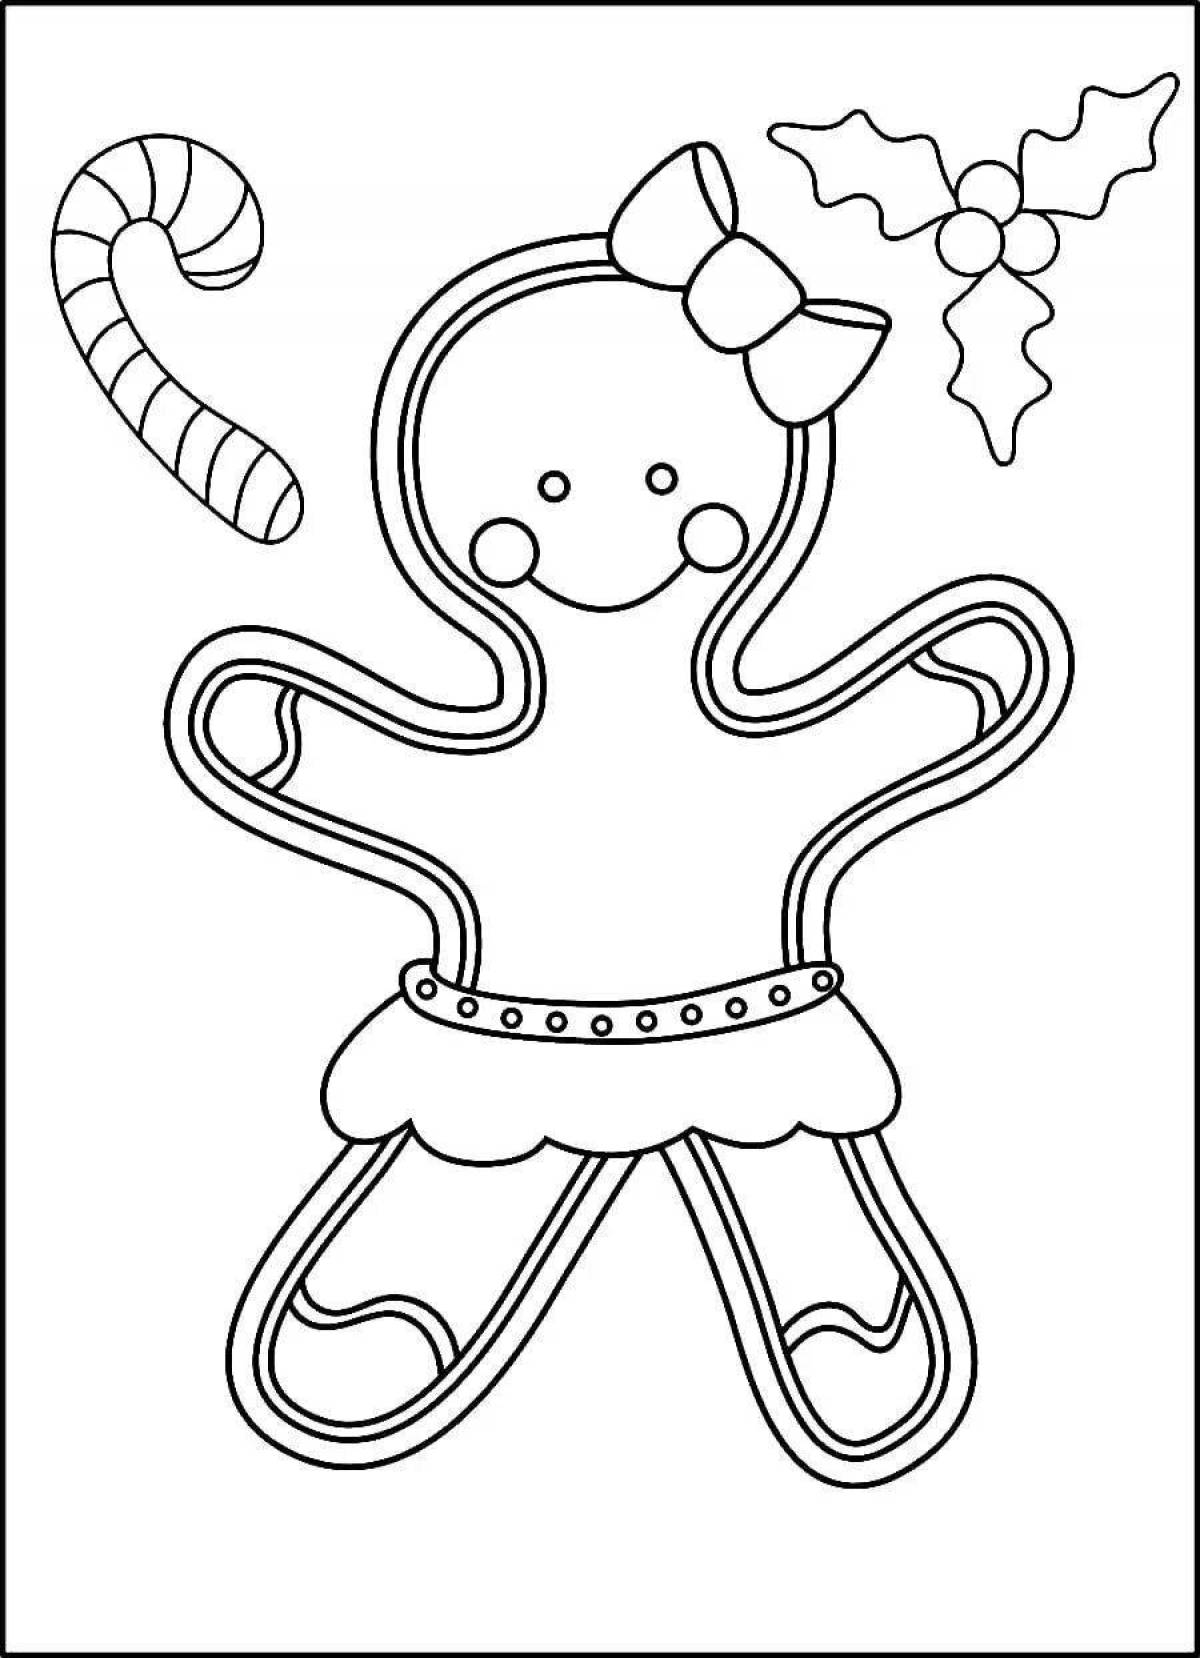 Coloring creative gingerbread man